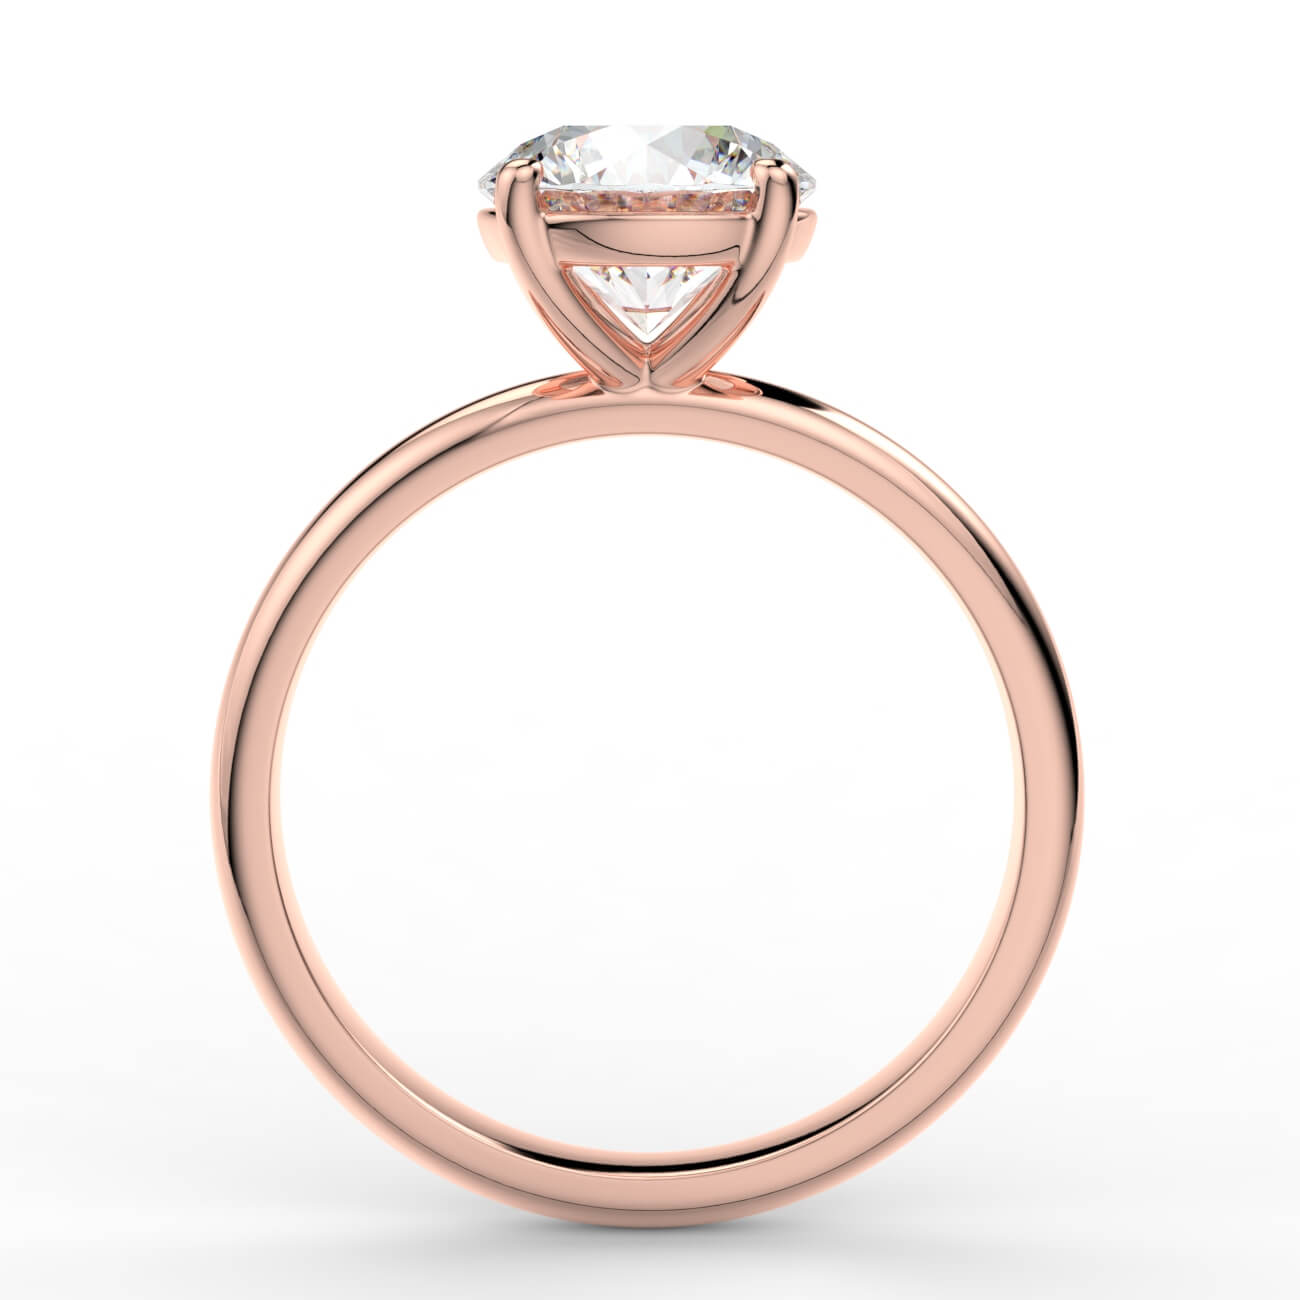 Solitaire diamond engagement ring in rose gold – Australian Diamond Network